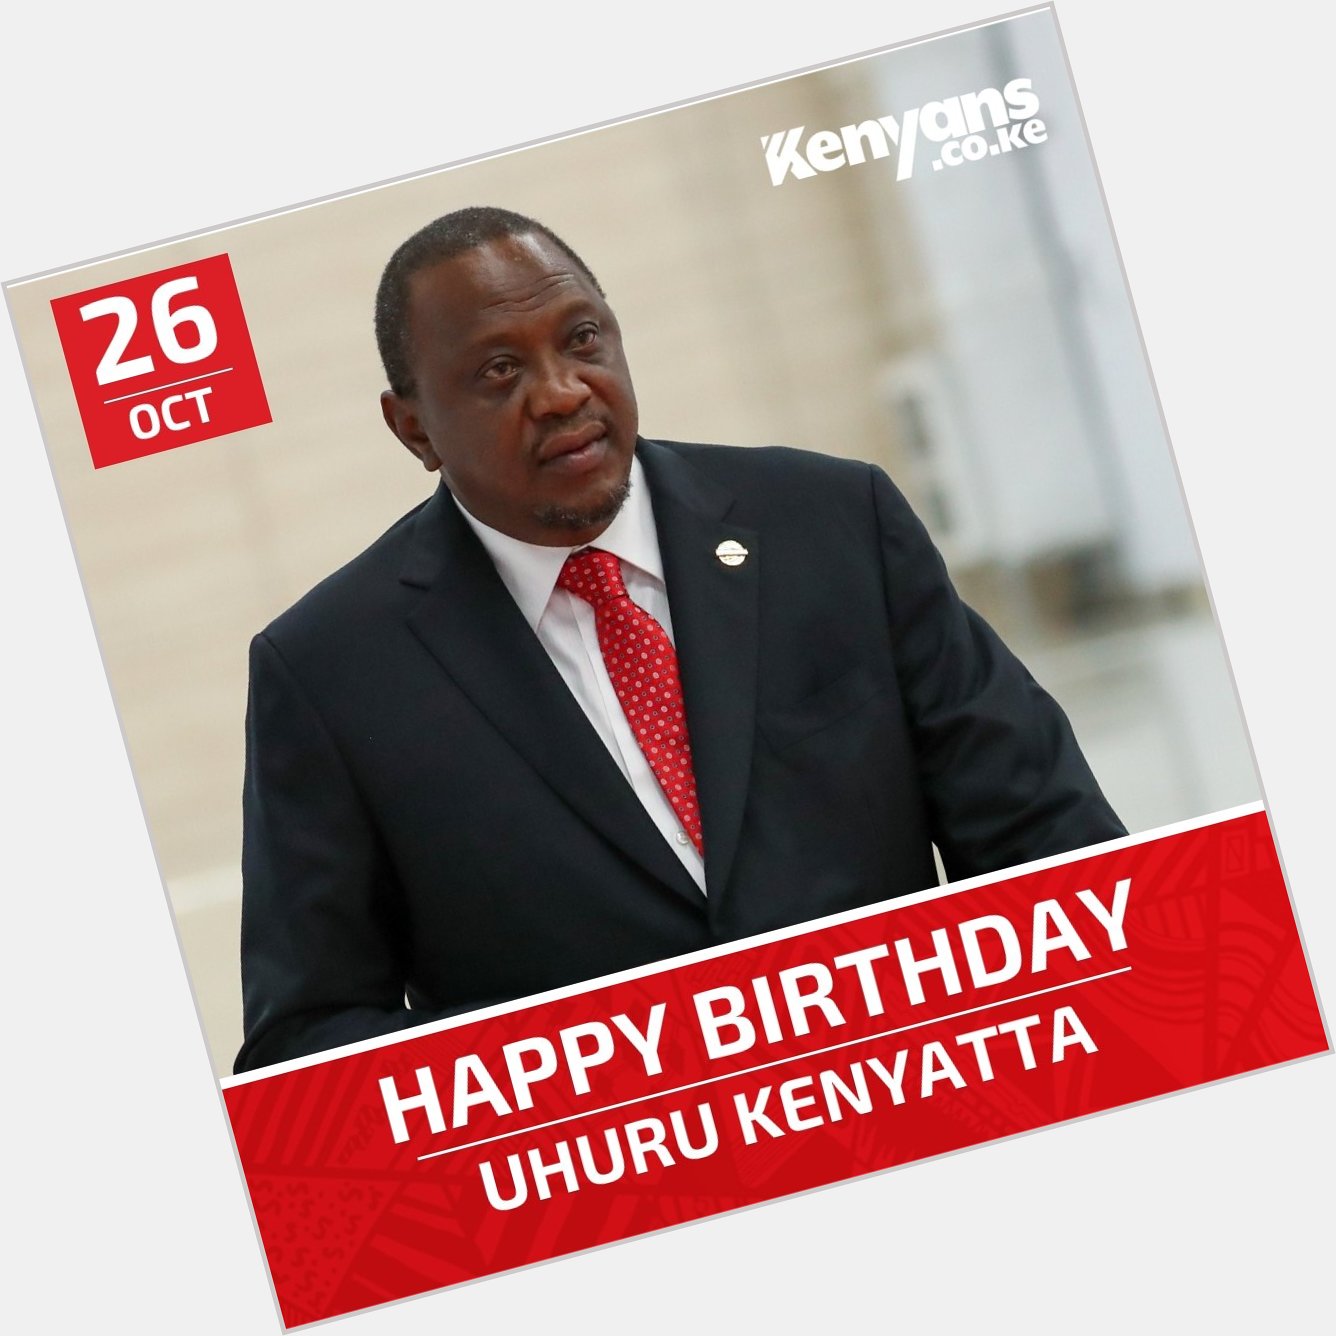 Happy Birthday President Uhuru Kenyatta.
We wish you a great and prosperous year ahead.   